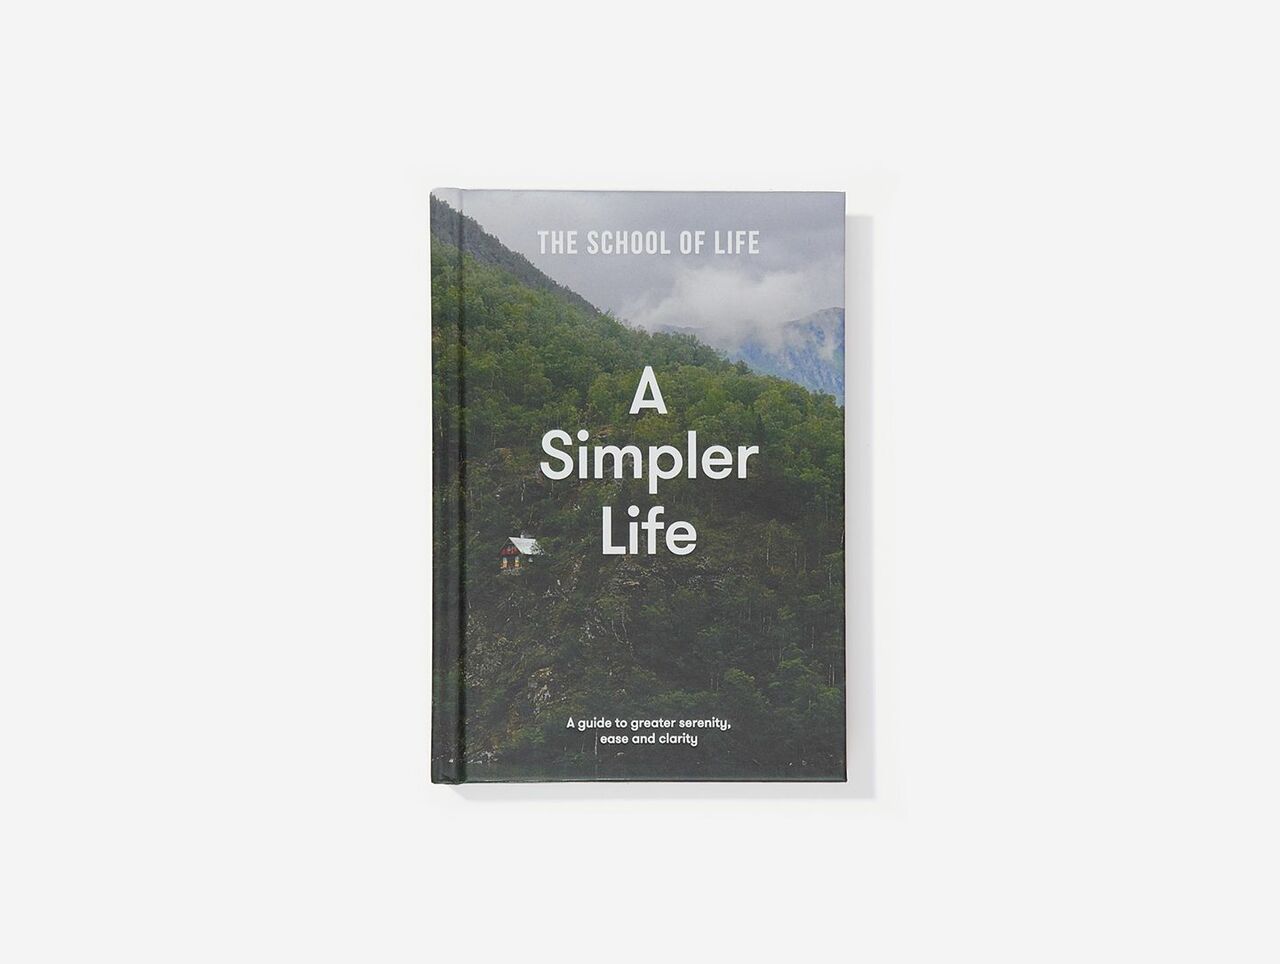 Alain de Botton, The School Life of School The: Simpler Life (2022, School of Life Press, The)